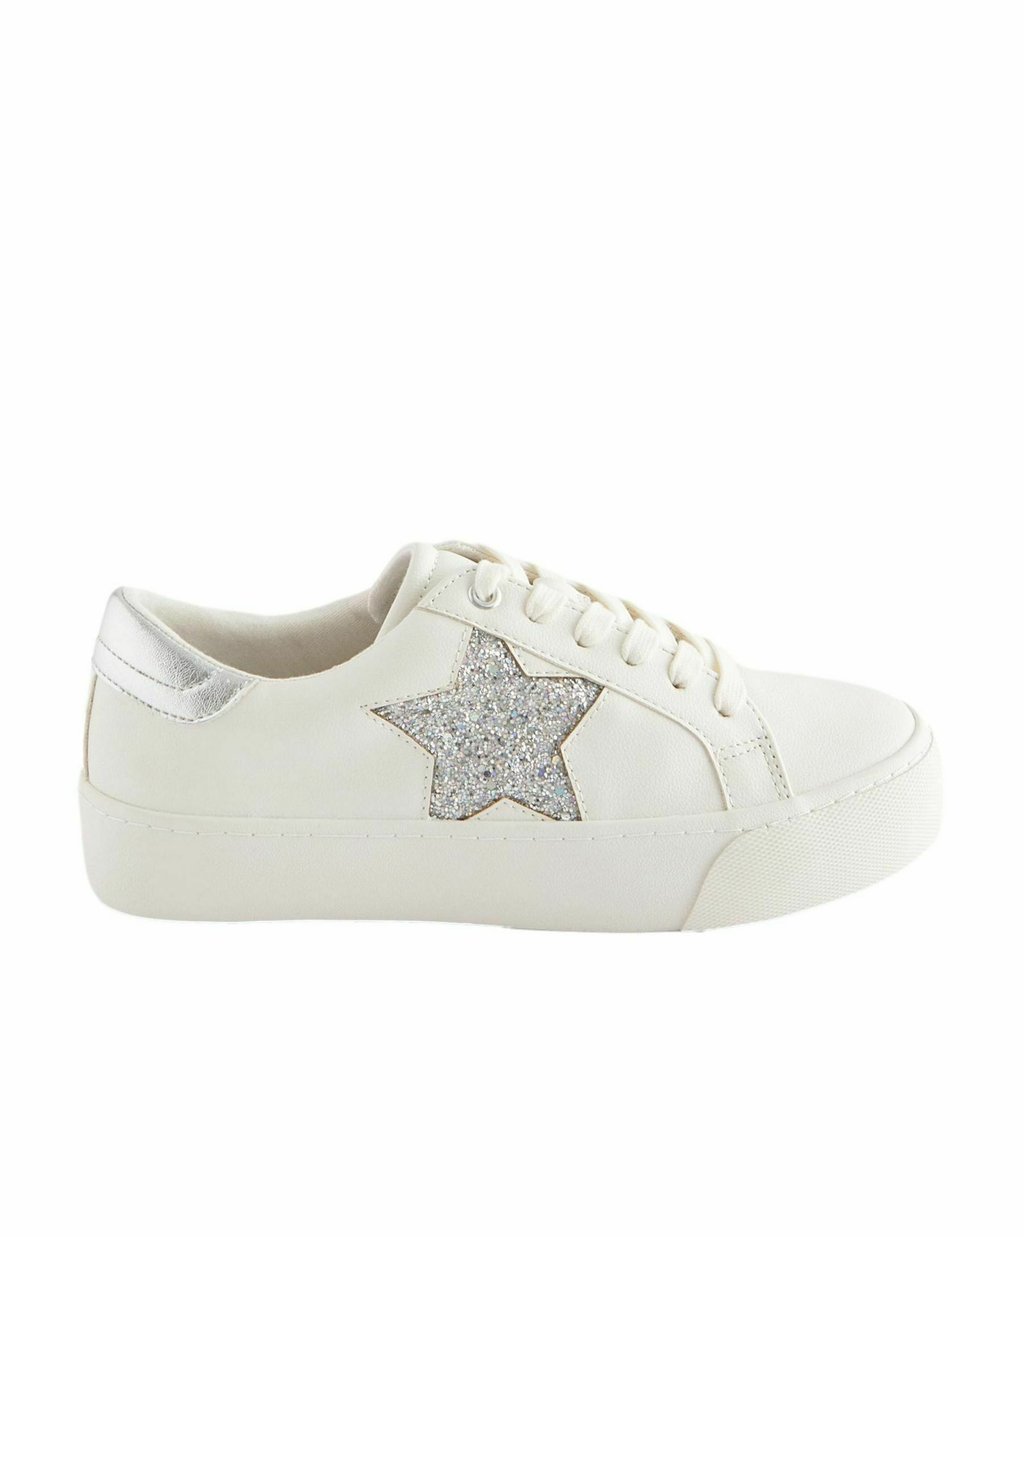 Низкие кроссовки Forever Comfort Chunky Star Regular Fit Next, цвет white silver кроссовки низкие signature chunky regular fit next цвет white